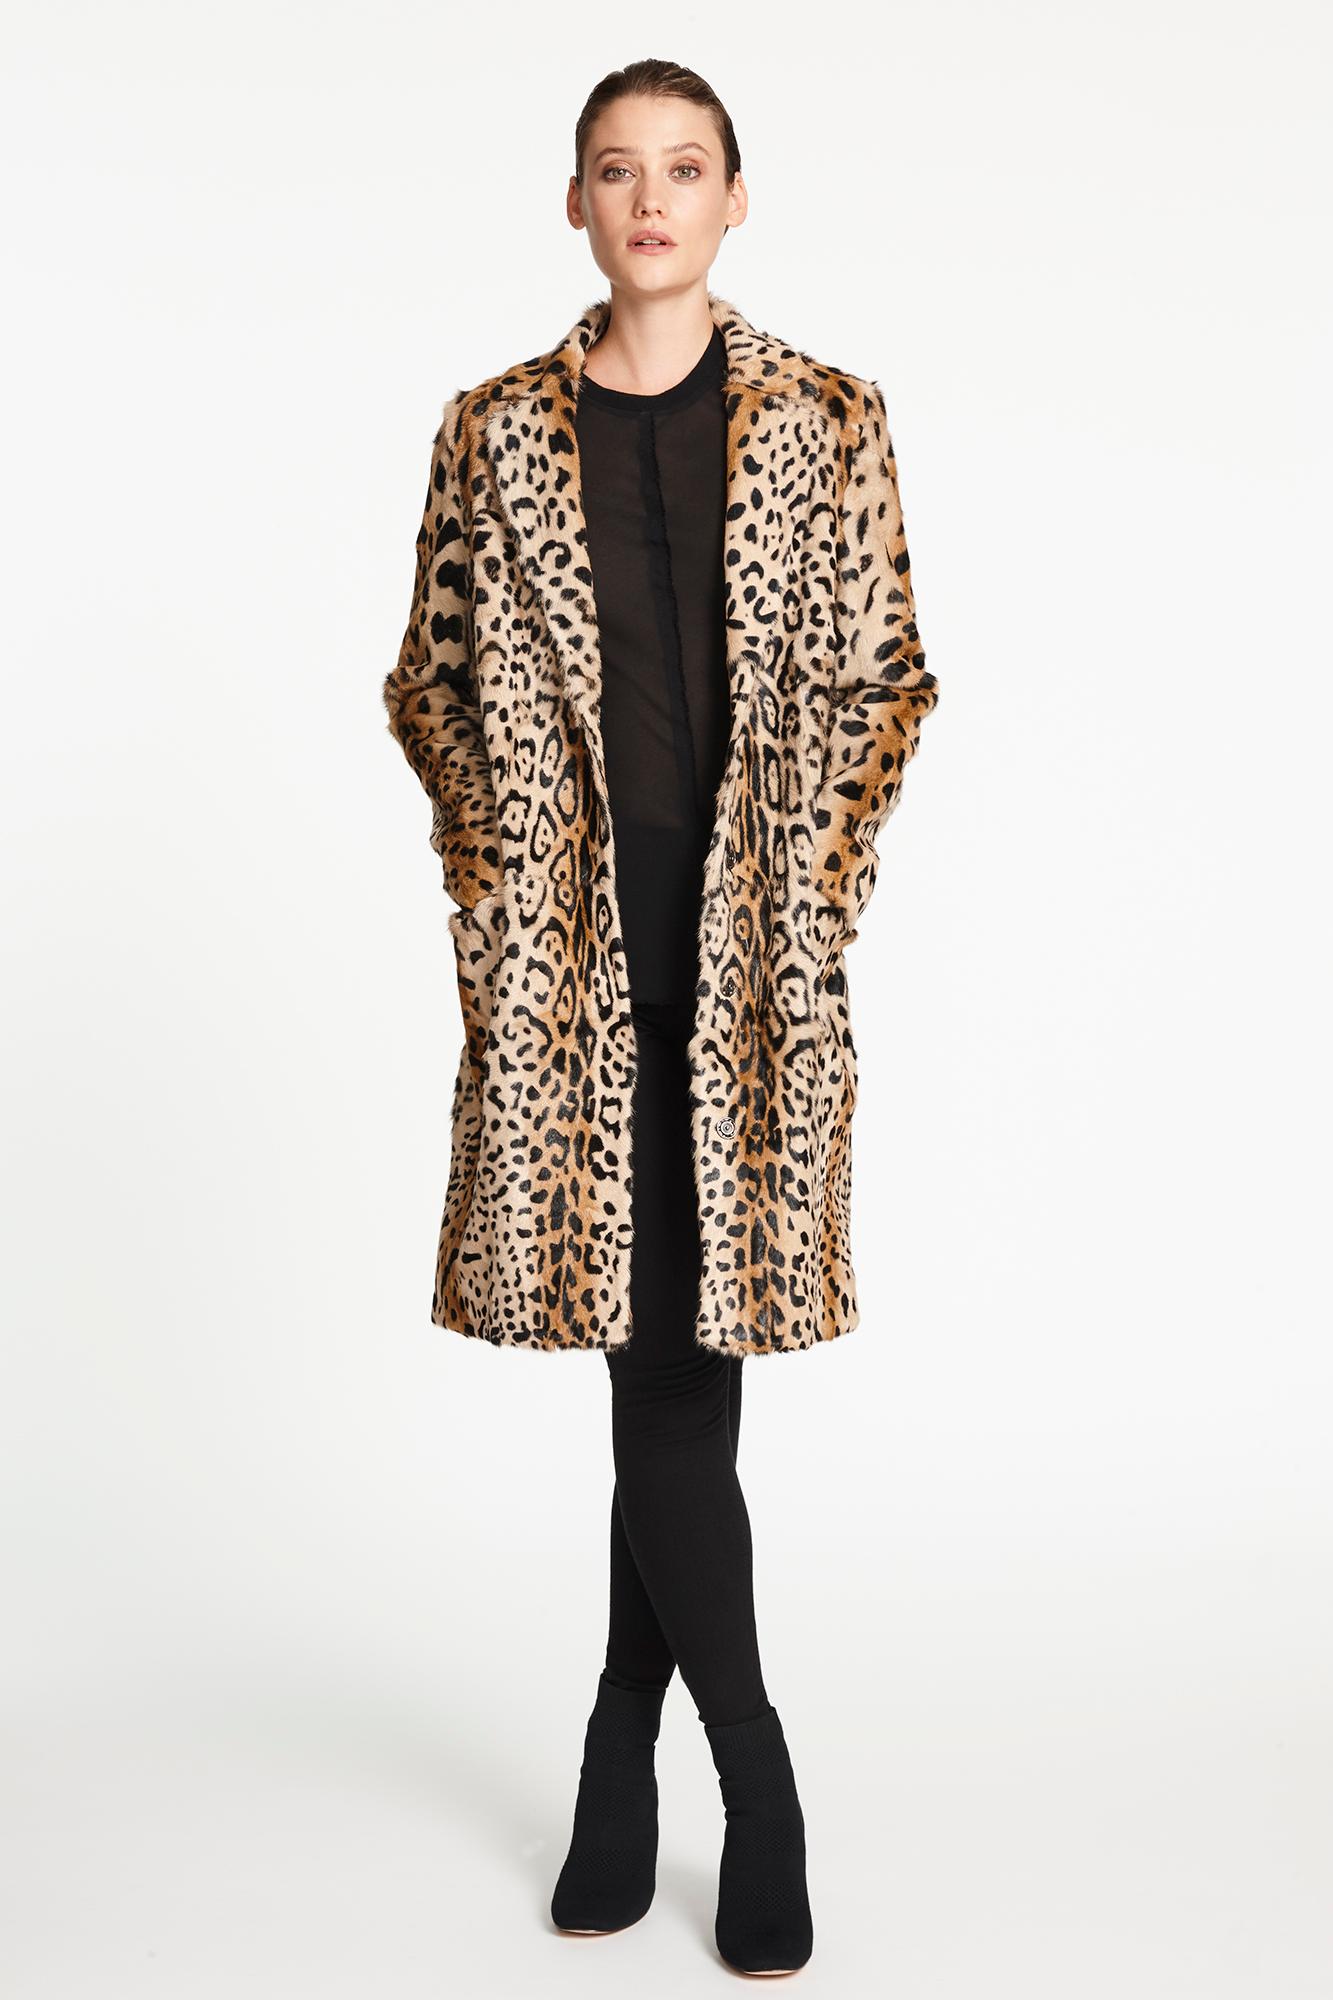 Verheyen London Leopard Print Coat in Red Ruby Goat Hair Fur UK 10 - Brand New  3